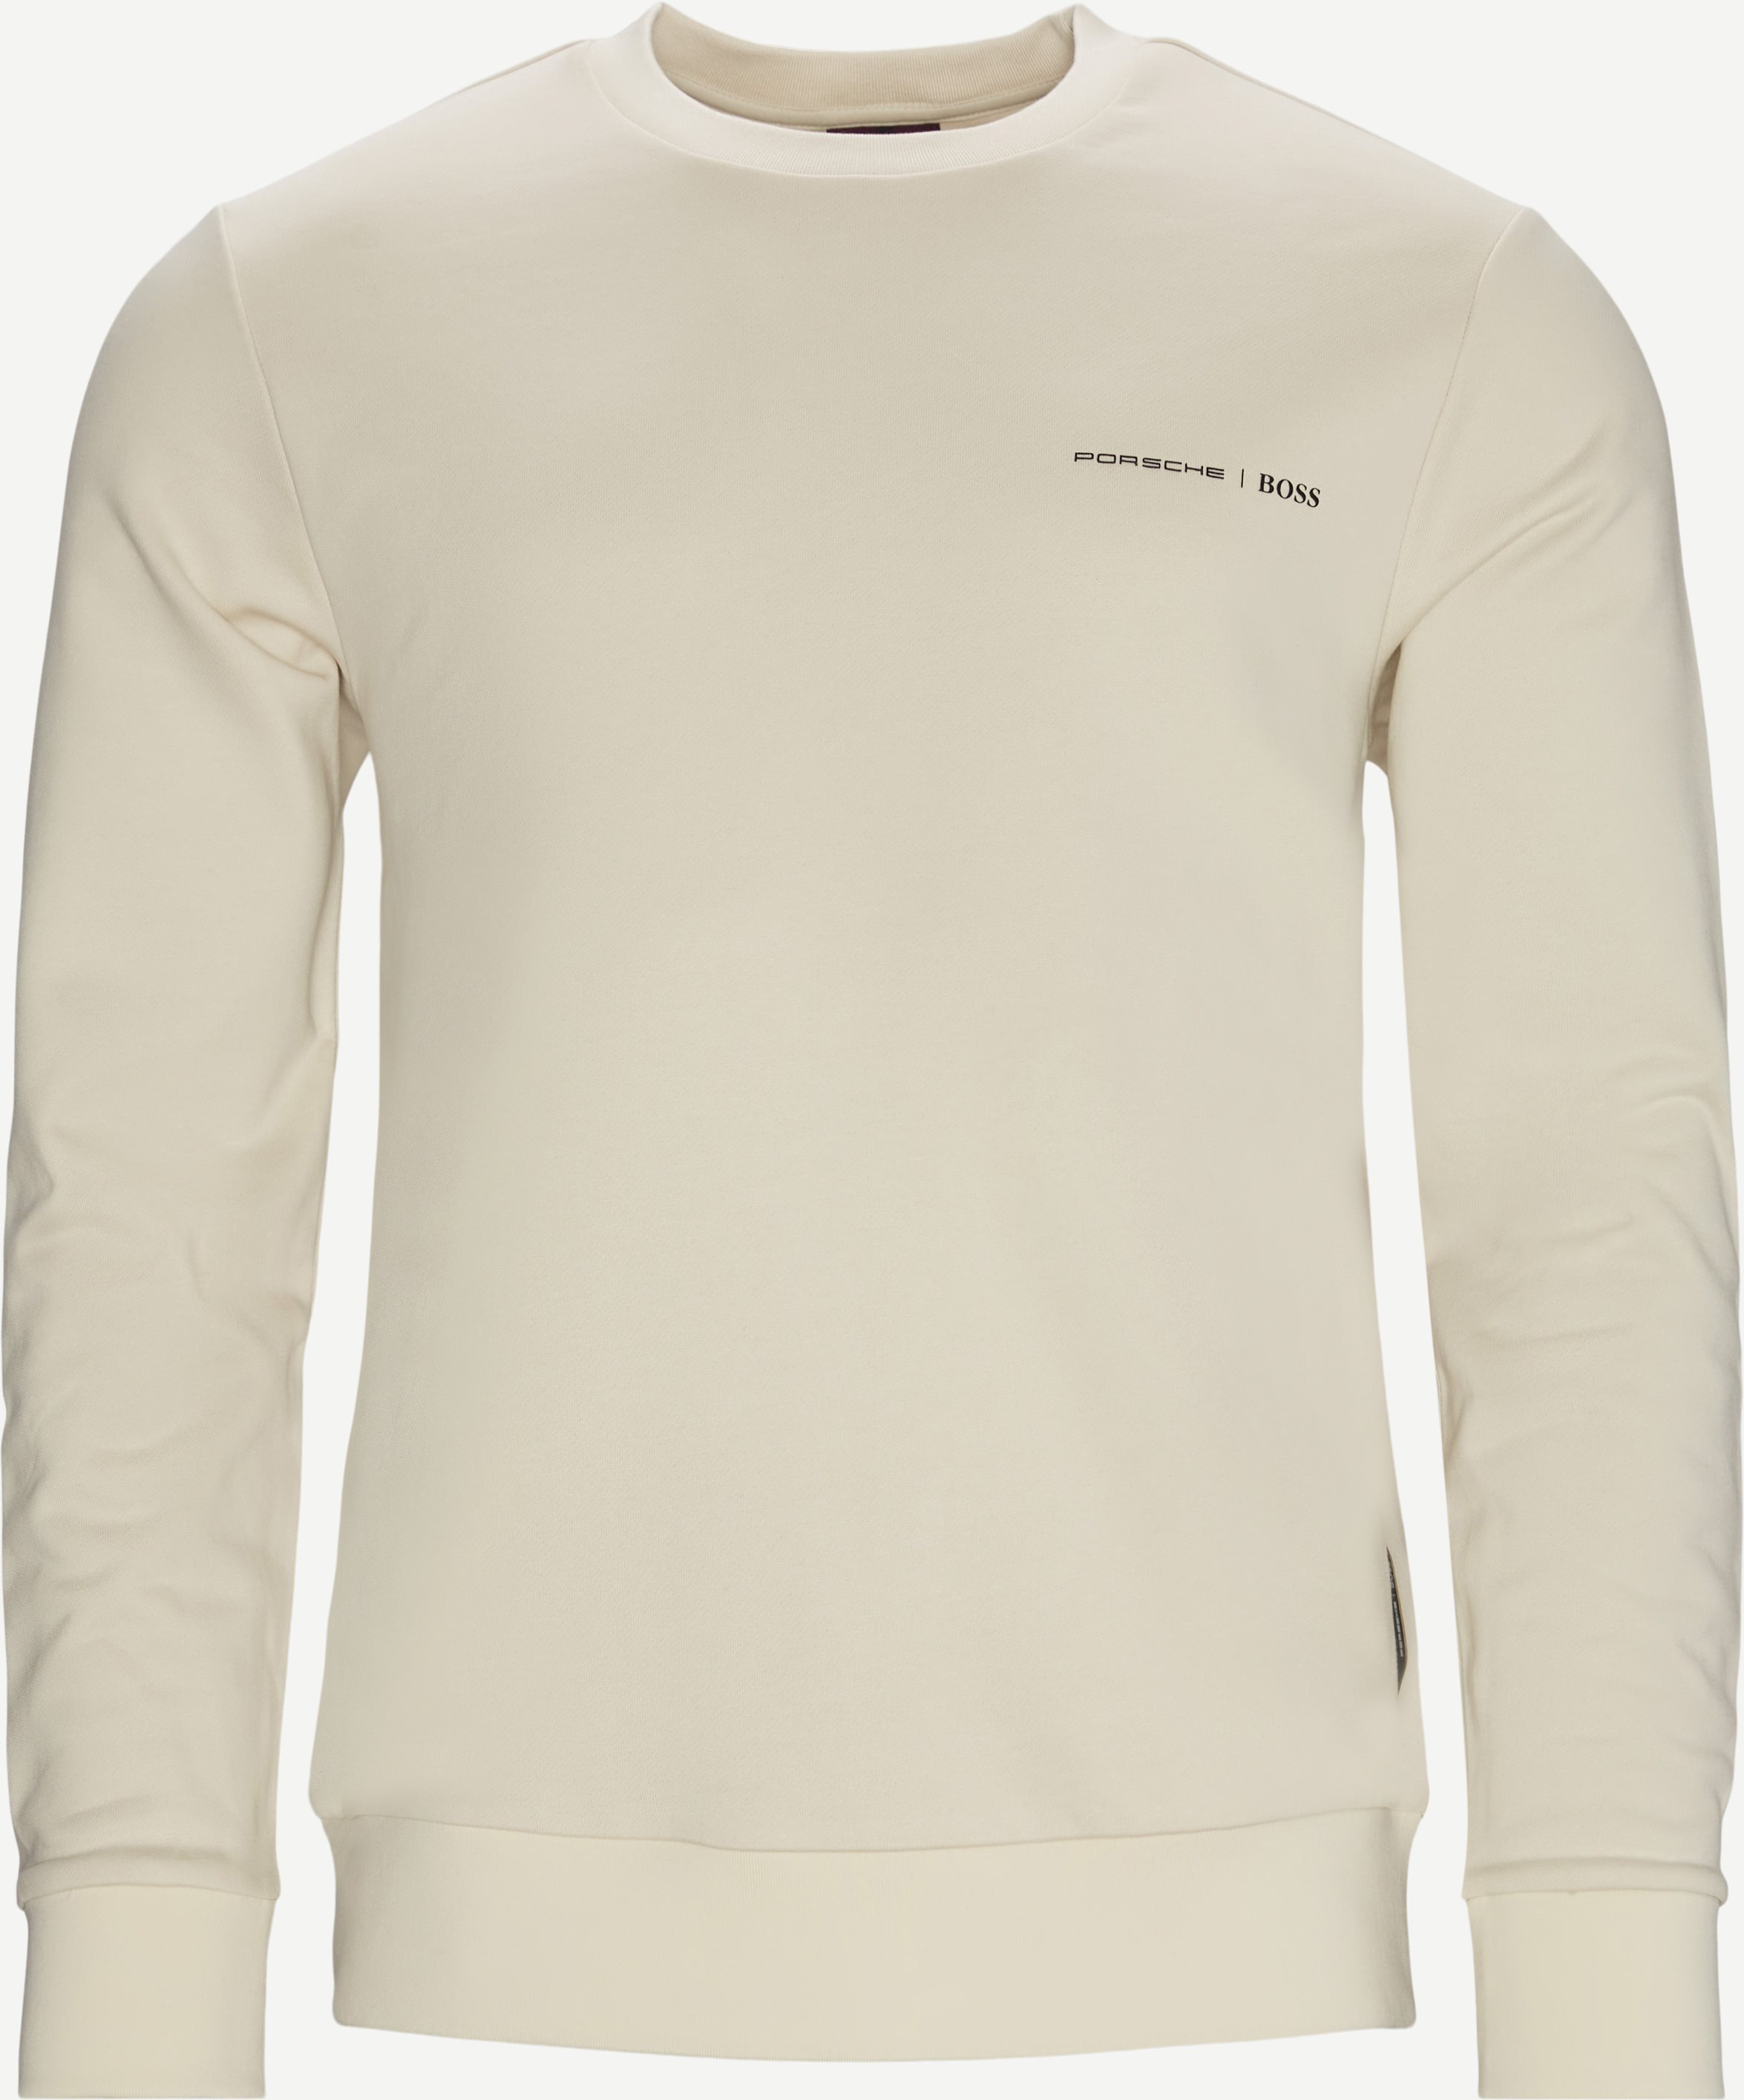 Stadler190_PS Porsche Sweatshirt - Sweatshirts - Regular fit - Sand